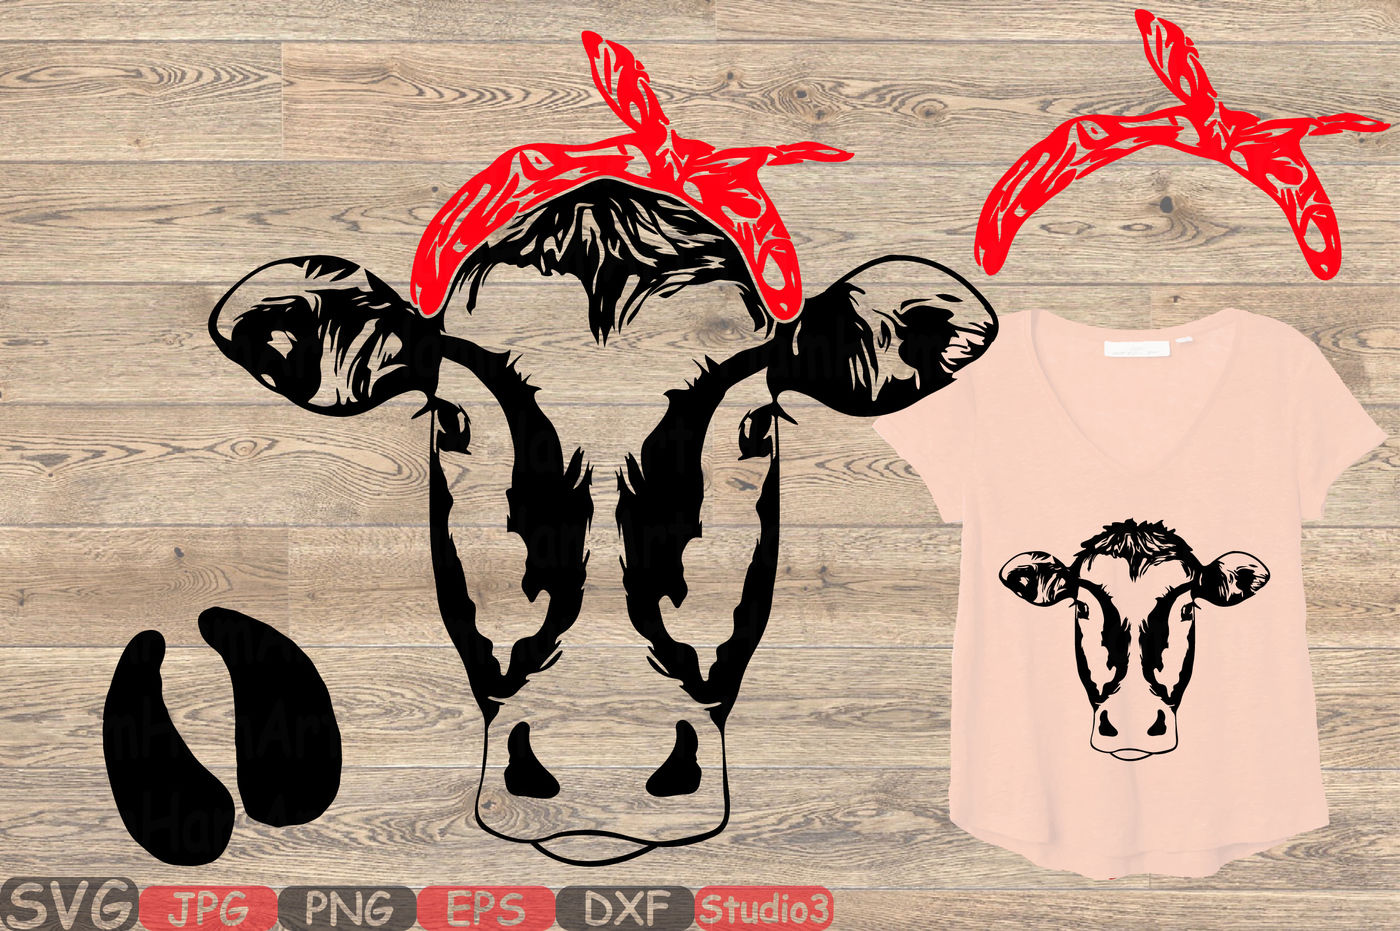 Cow Head Whit Bandana Silhouette Svg Cowboy Western Farm Milk 866s By Hamhamart Thehungryjpeg Com